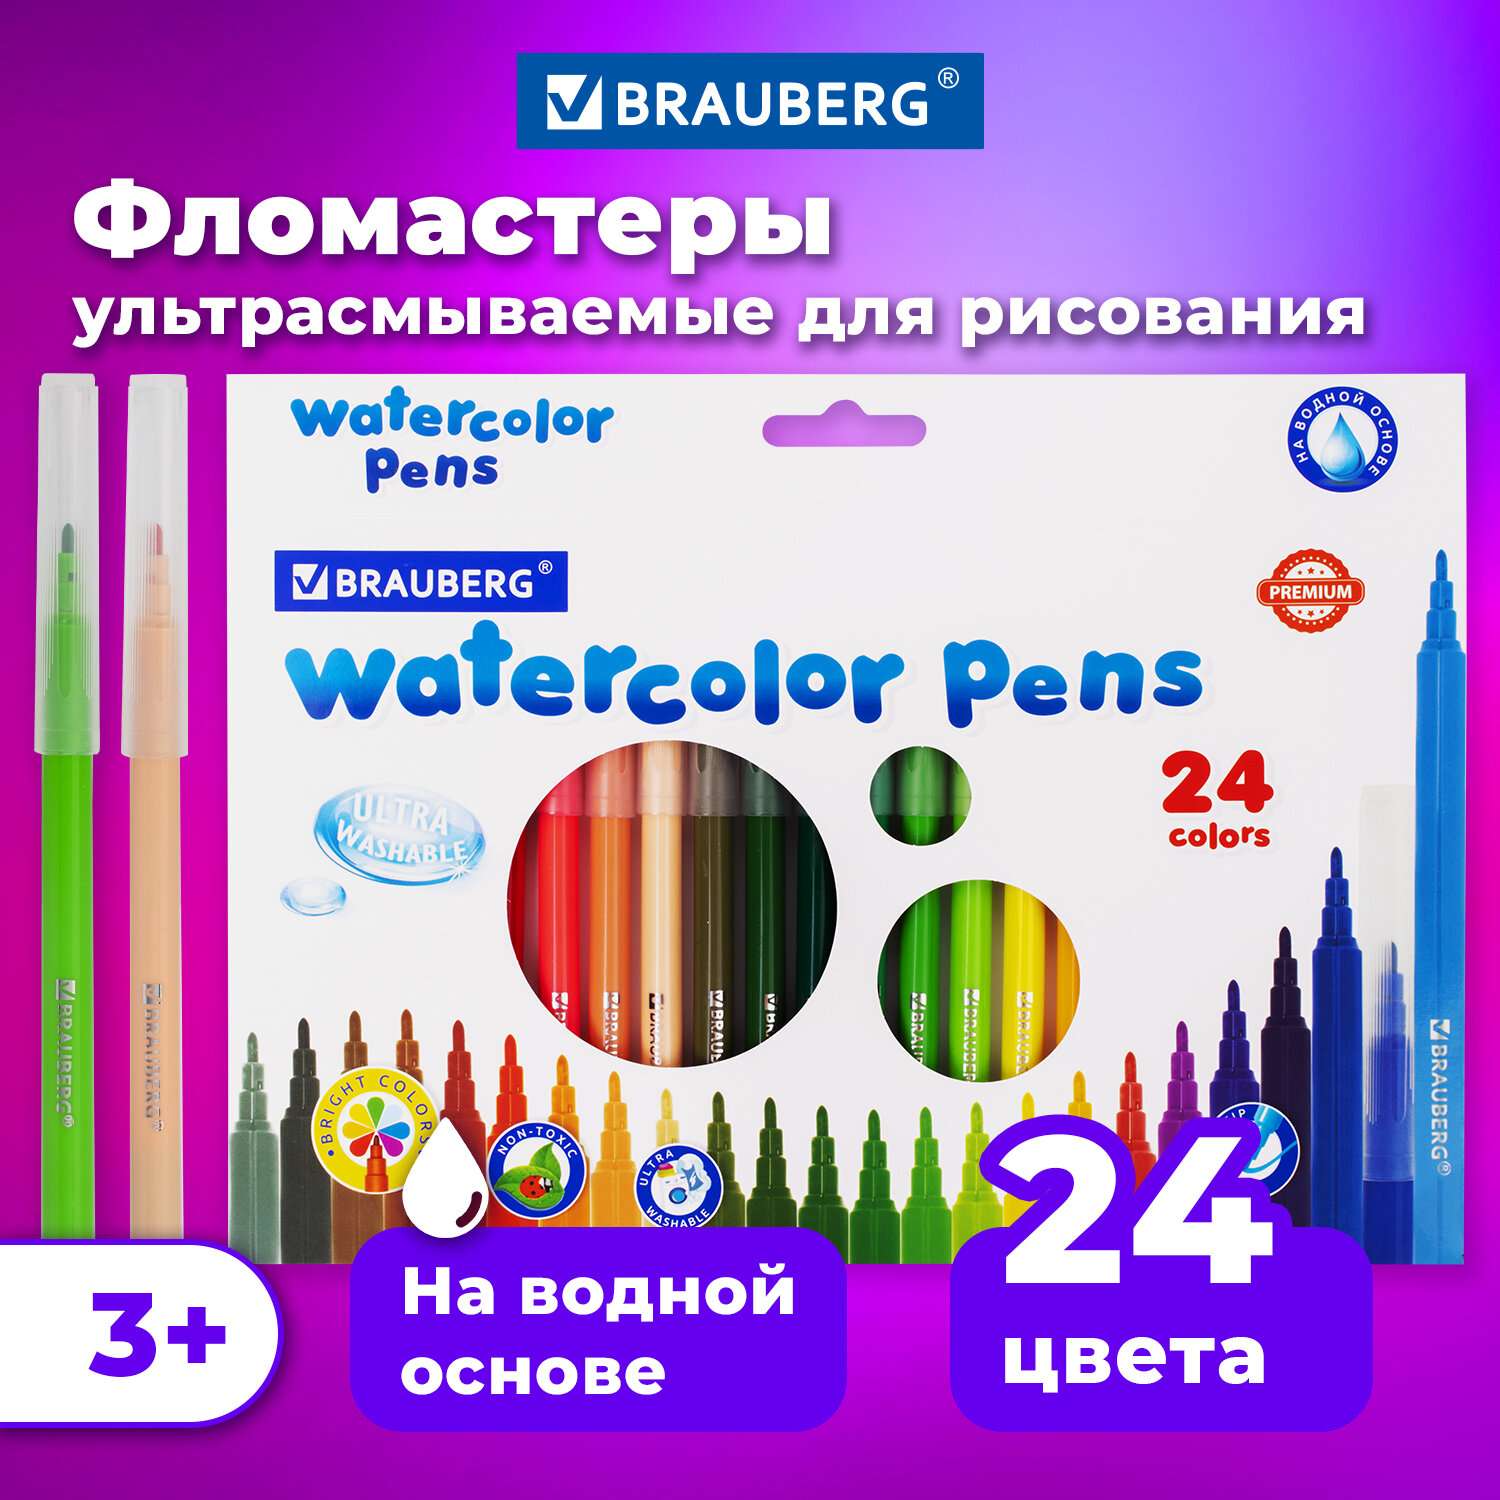 Фломастеры Brauberg Premium 24 цвета ультра-смываемые - фото 3